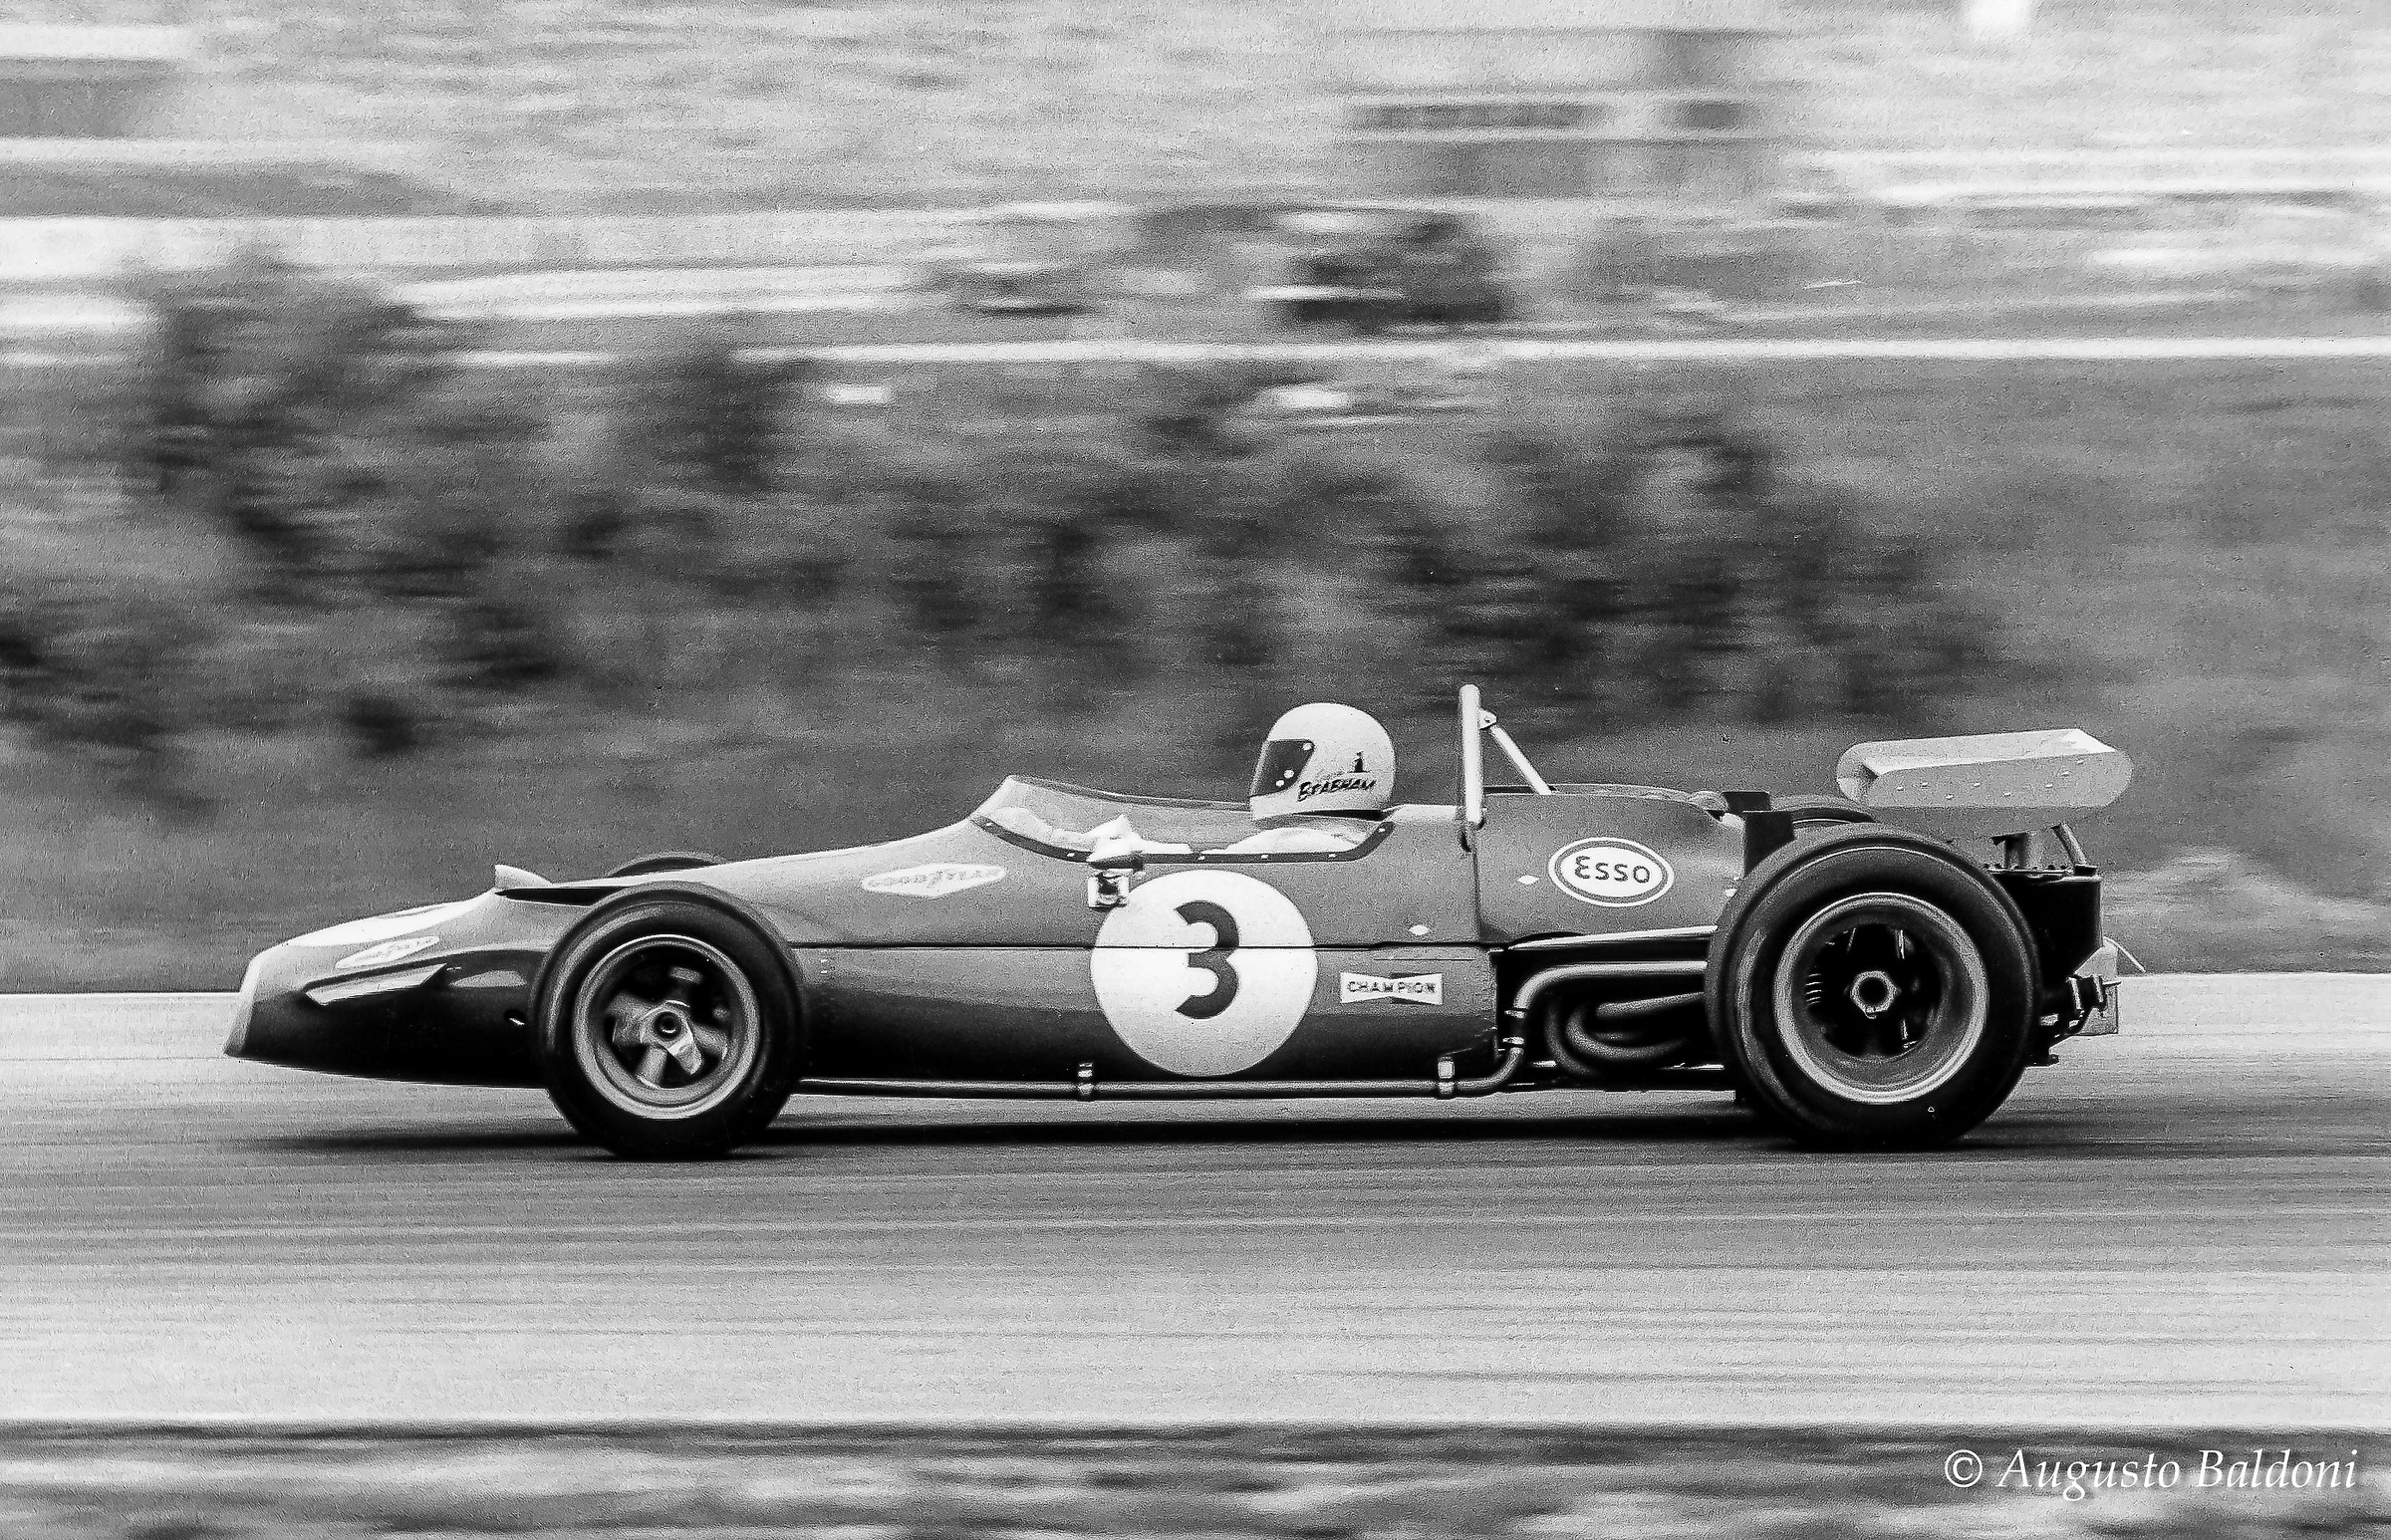 Jack Brabham (1926 - 2014)...